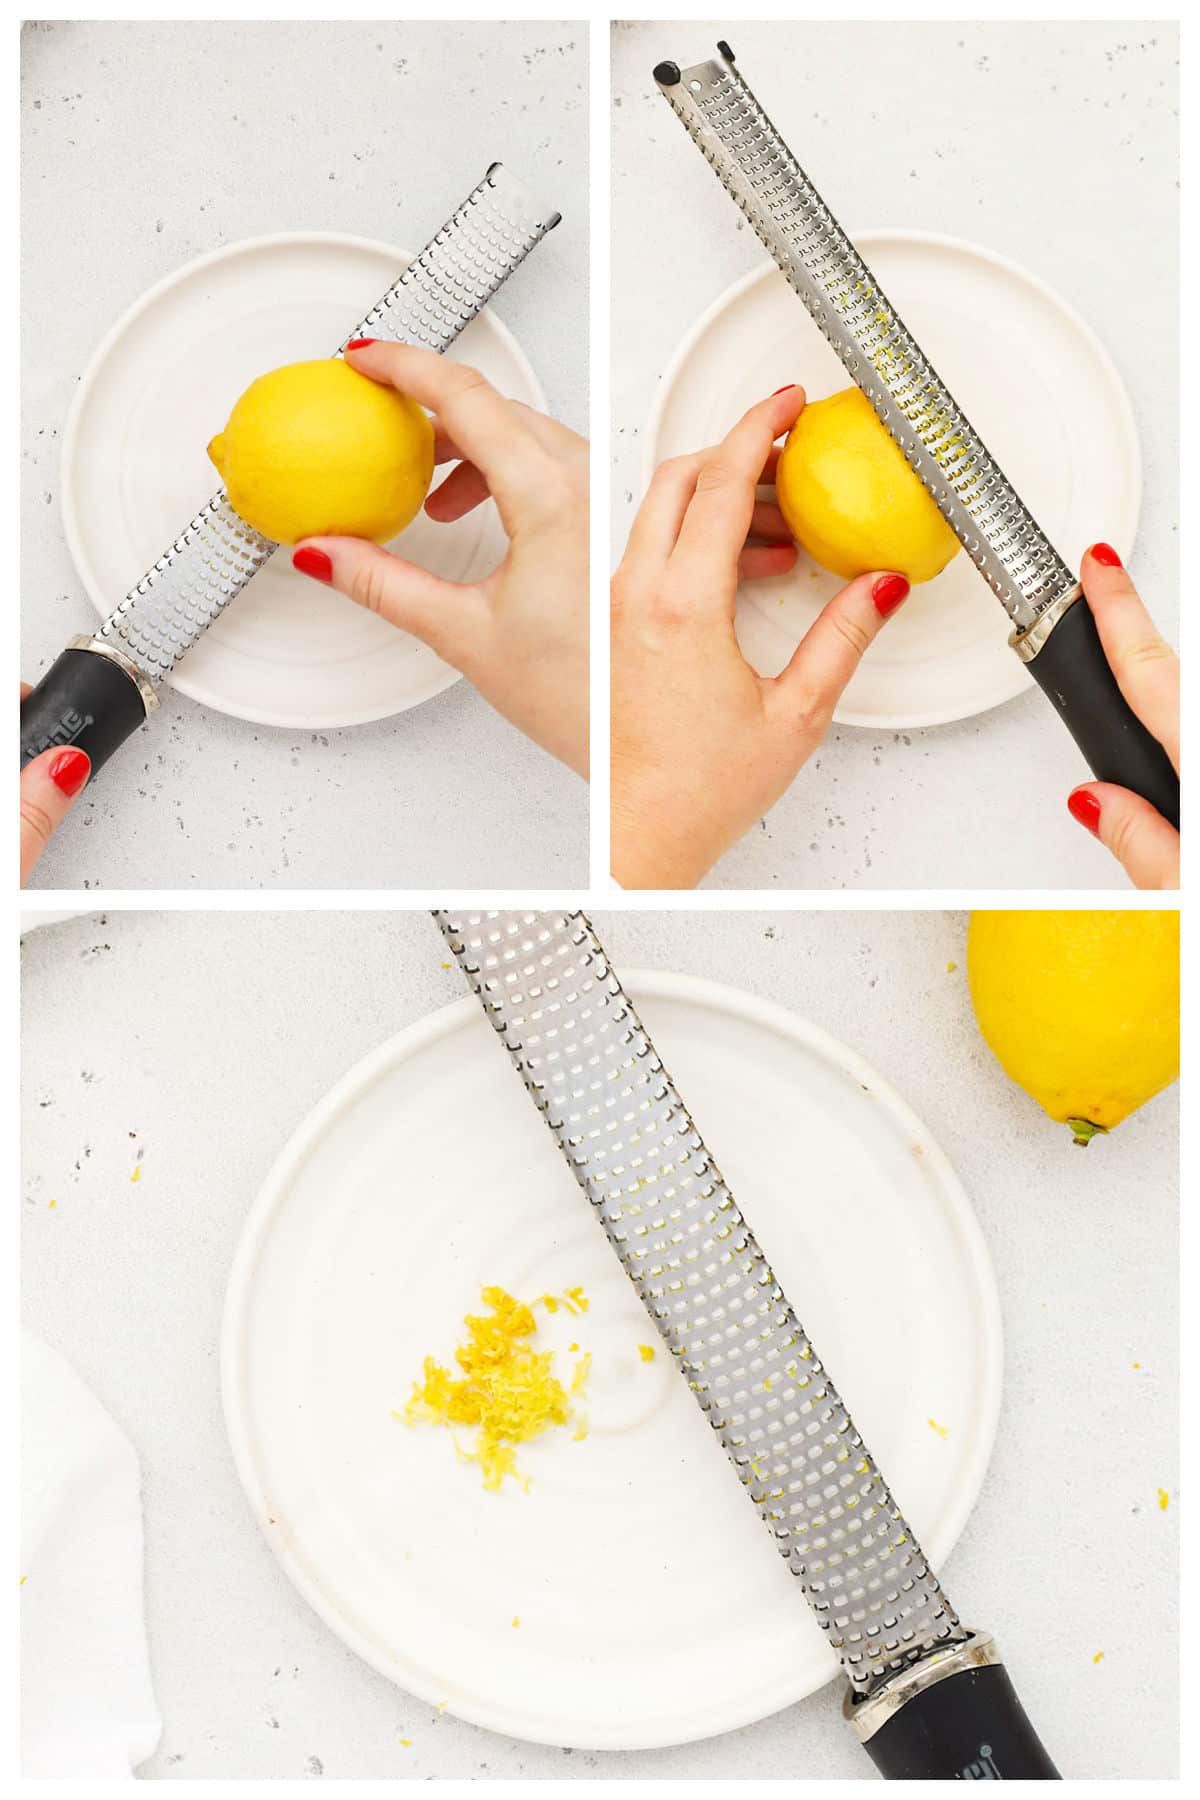 zest a lemon with a microplane zester